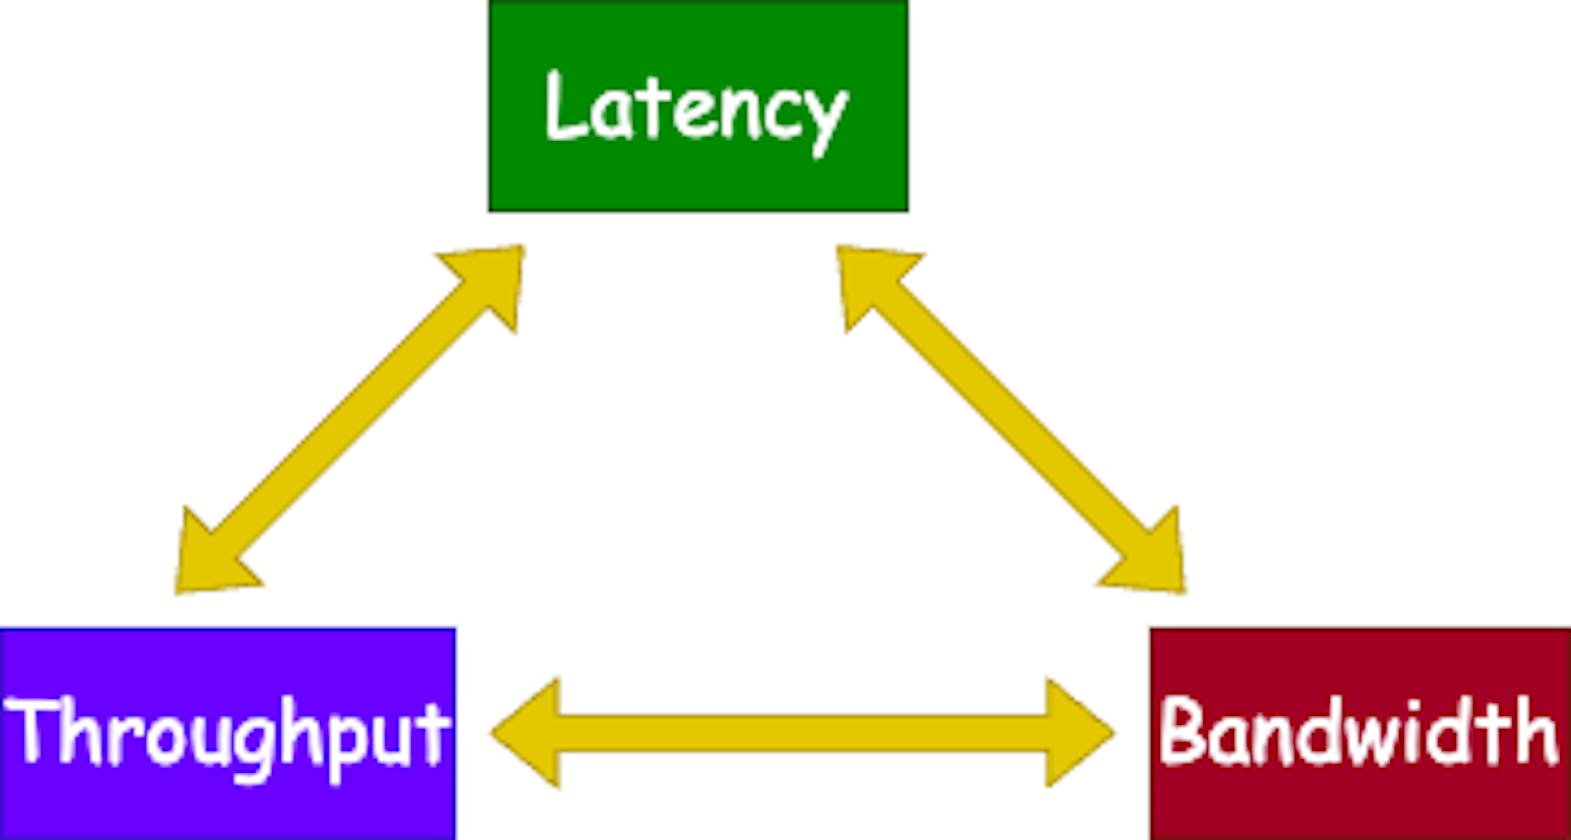 Explain Latency, Throughput, and Bandwidth like I’m 5